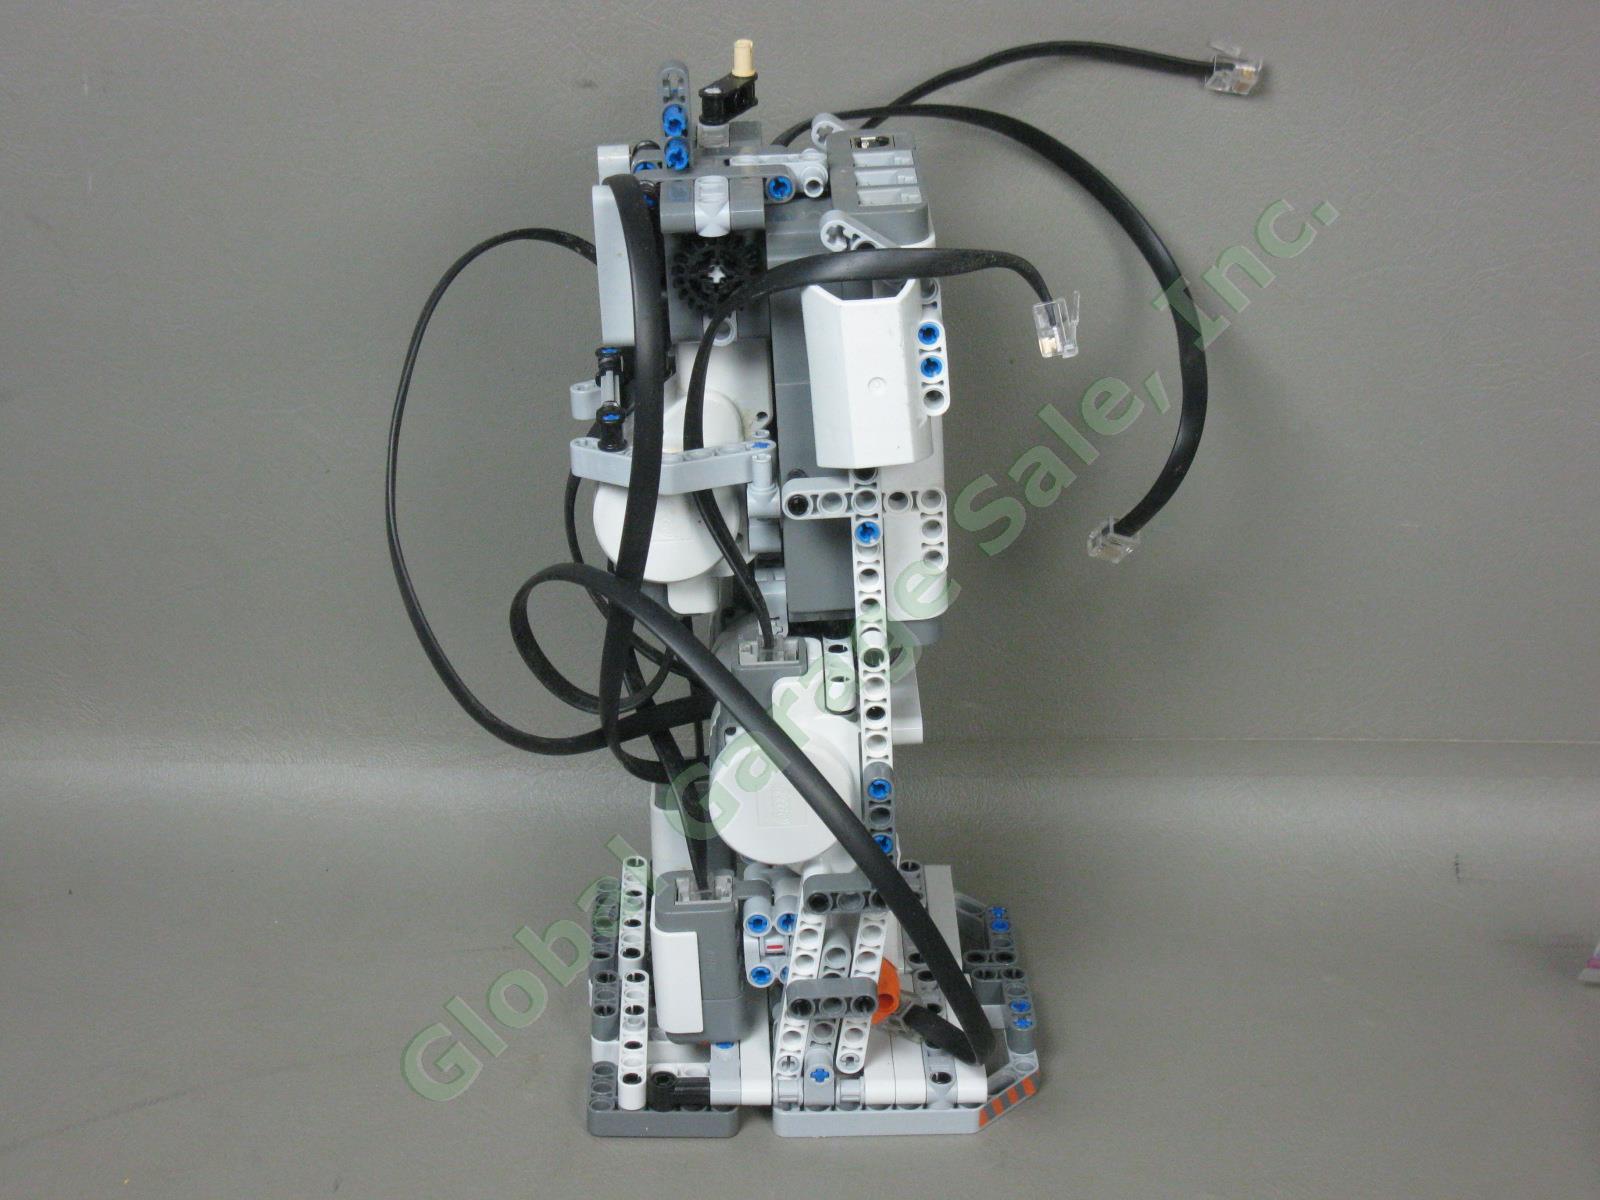 Lego Mindstorms NXT 2.0 8547 Robot Building Set Windows/Mac w/Original Box NR! 2